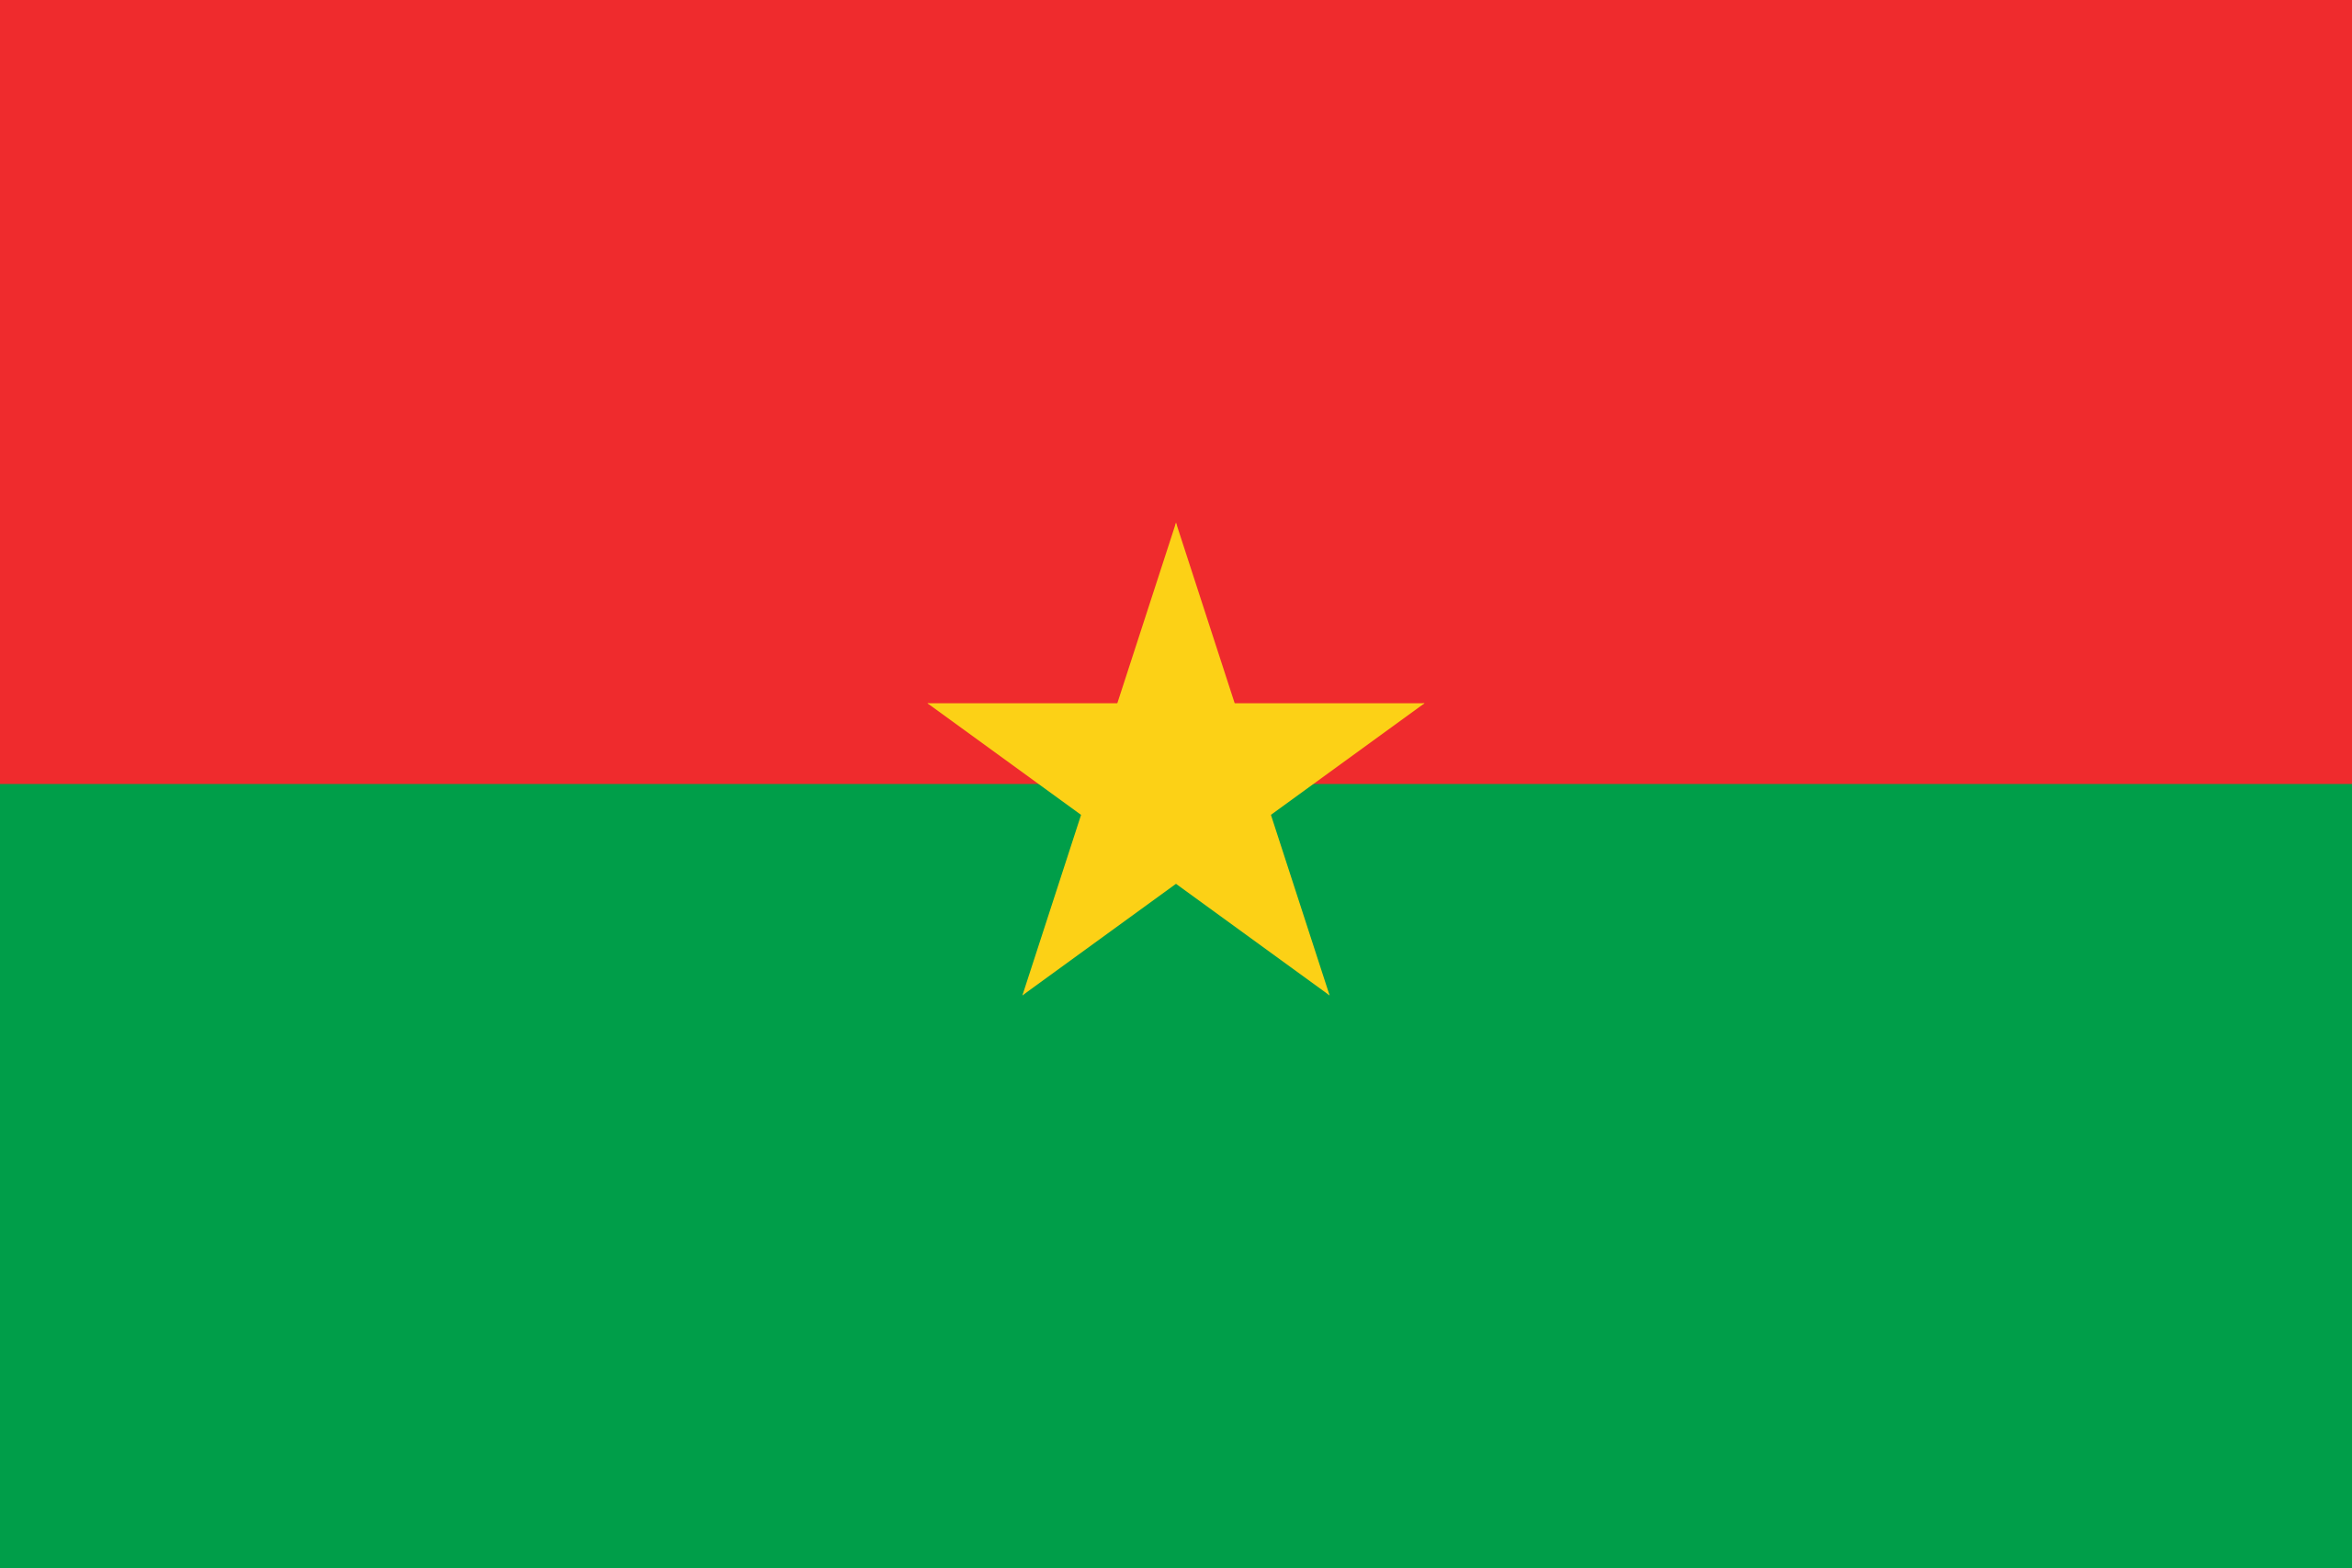 Burkina Faso's flag